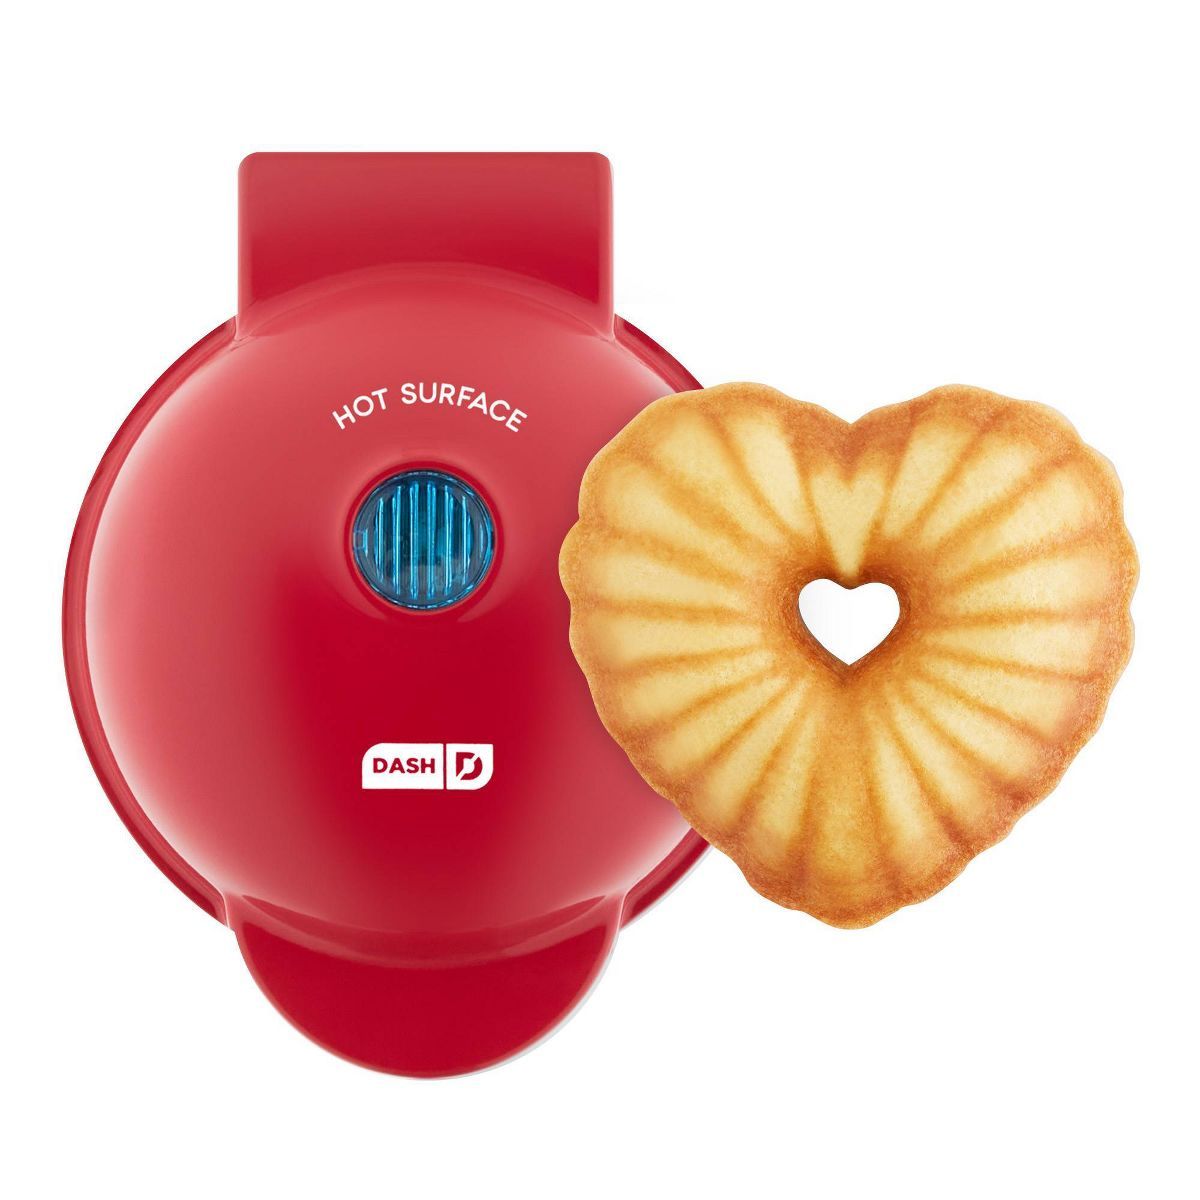 Dash Mini Heart Bundt Cake Maker | Target